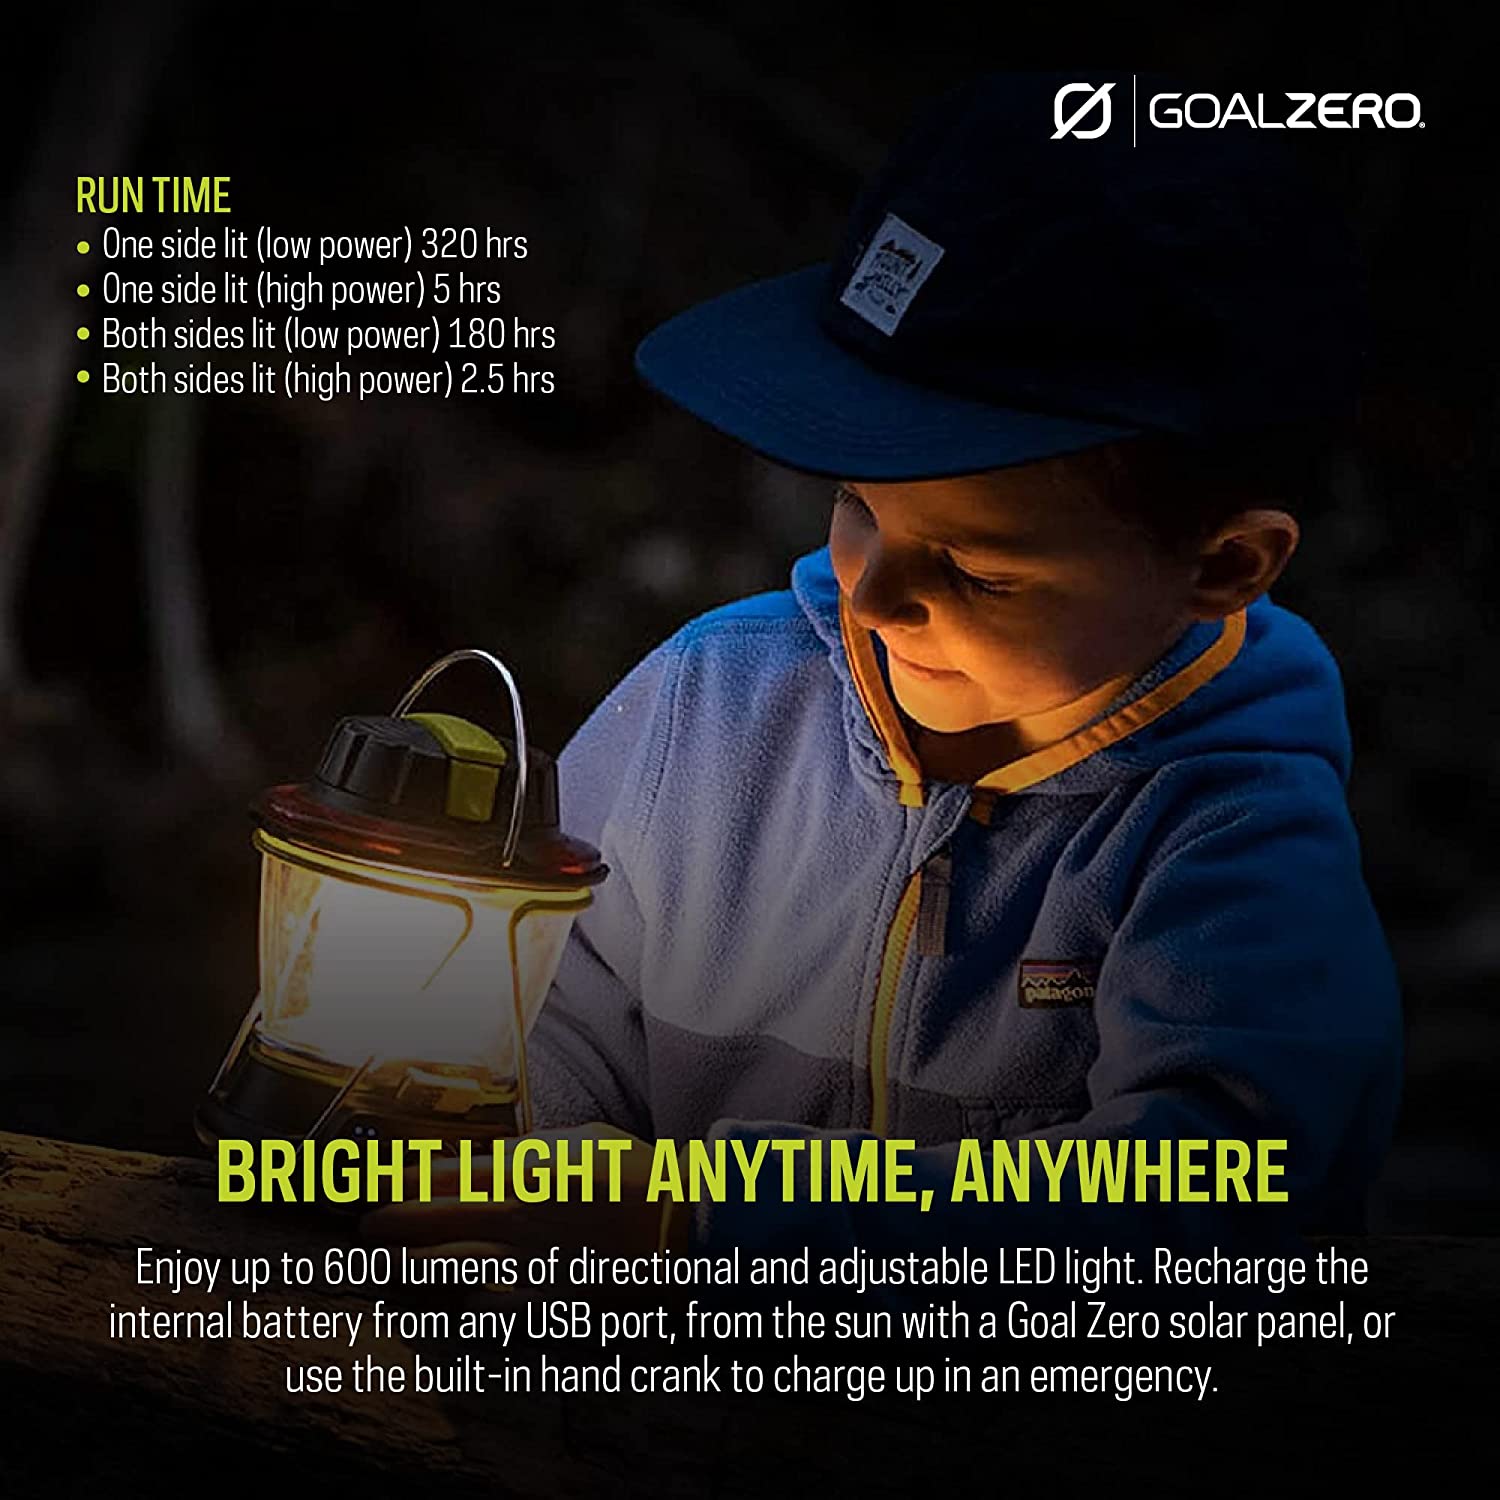 Goal Zero Lighthouse 600 Lantern & USB Power Hub